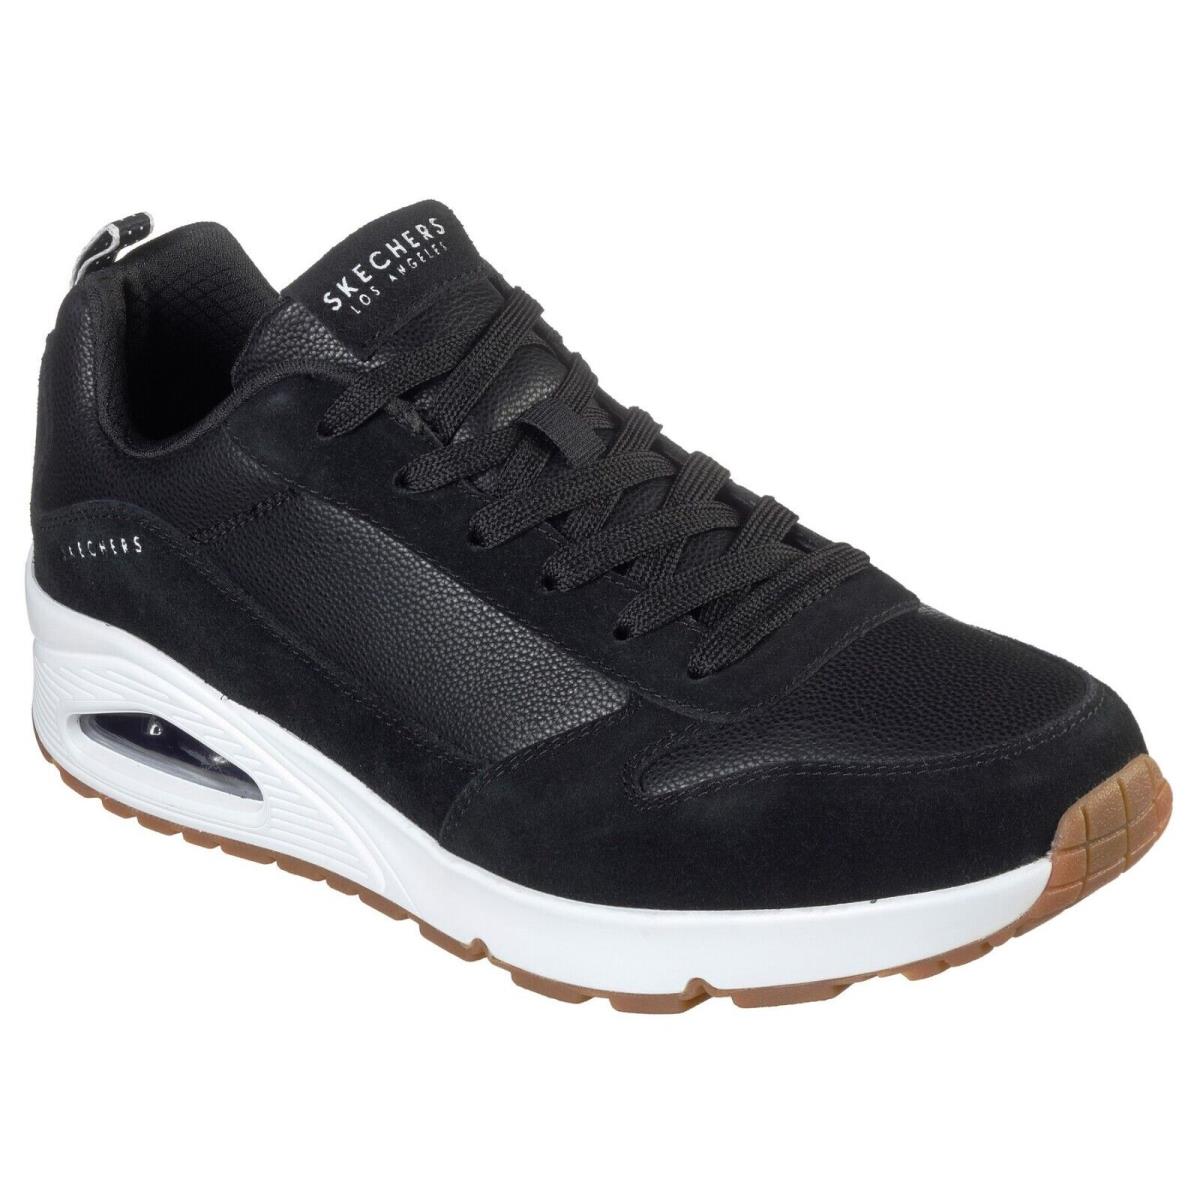 Skechers shoes Uno Stacre - Black/White 4